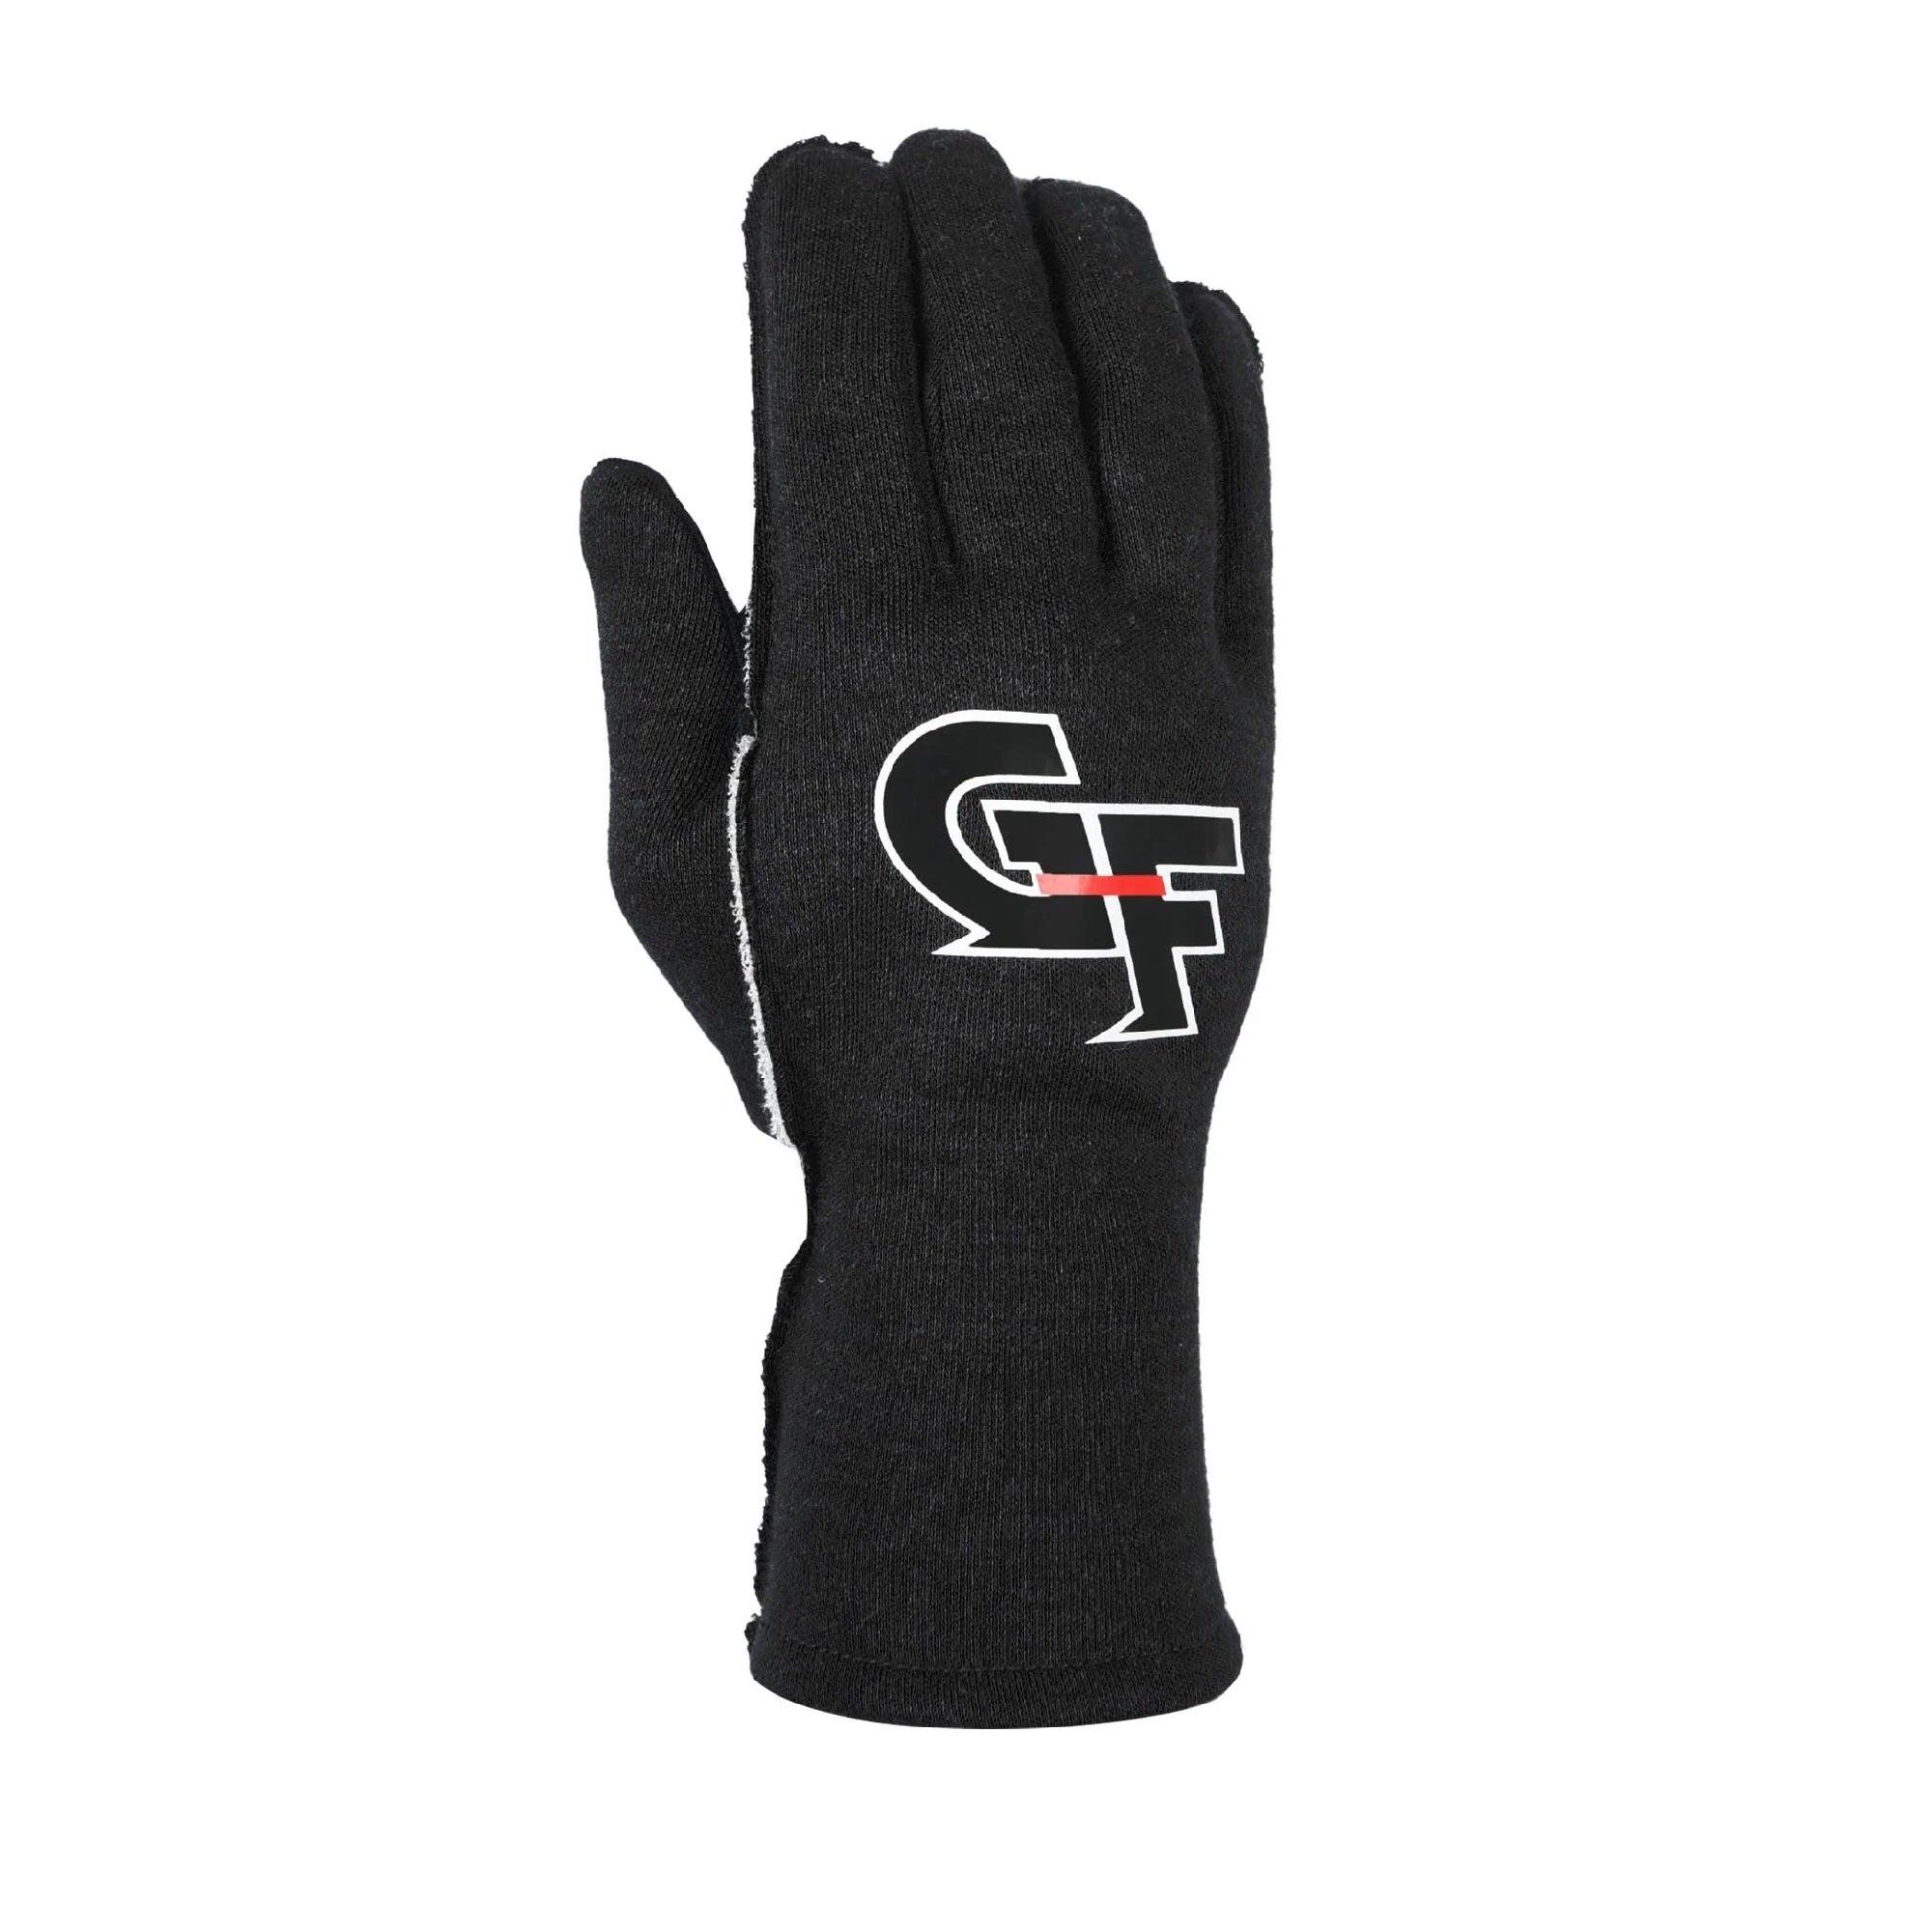 Gloves G-Limit XX-Large Black - Burlile Performance Products